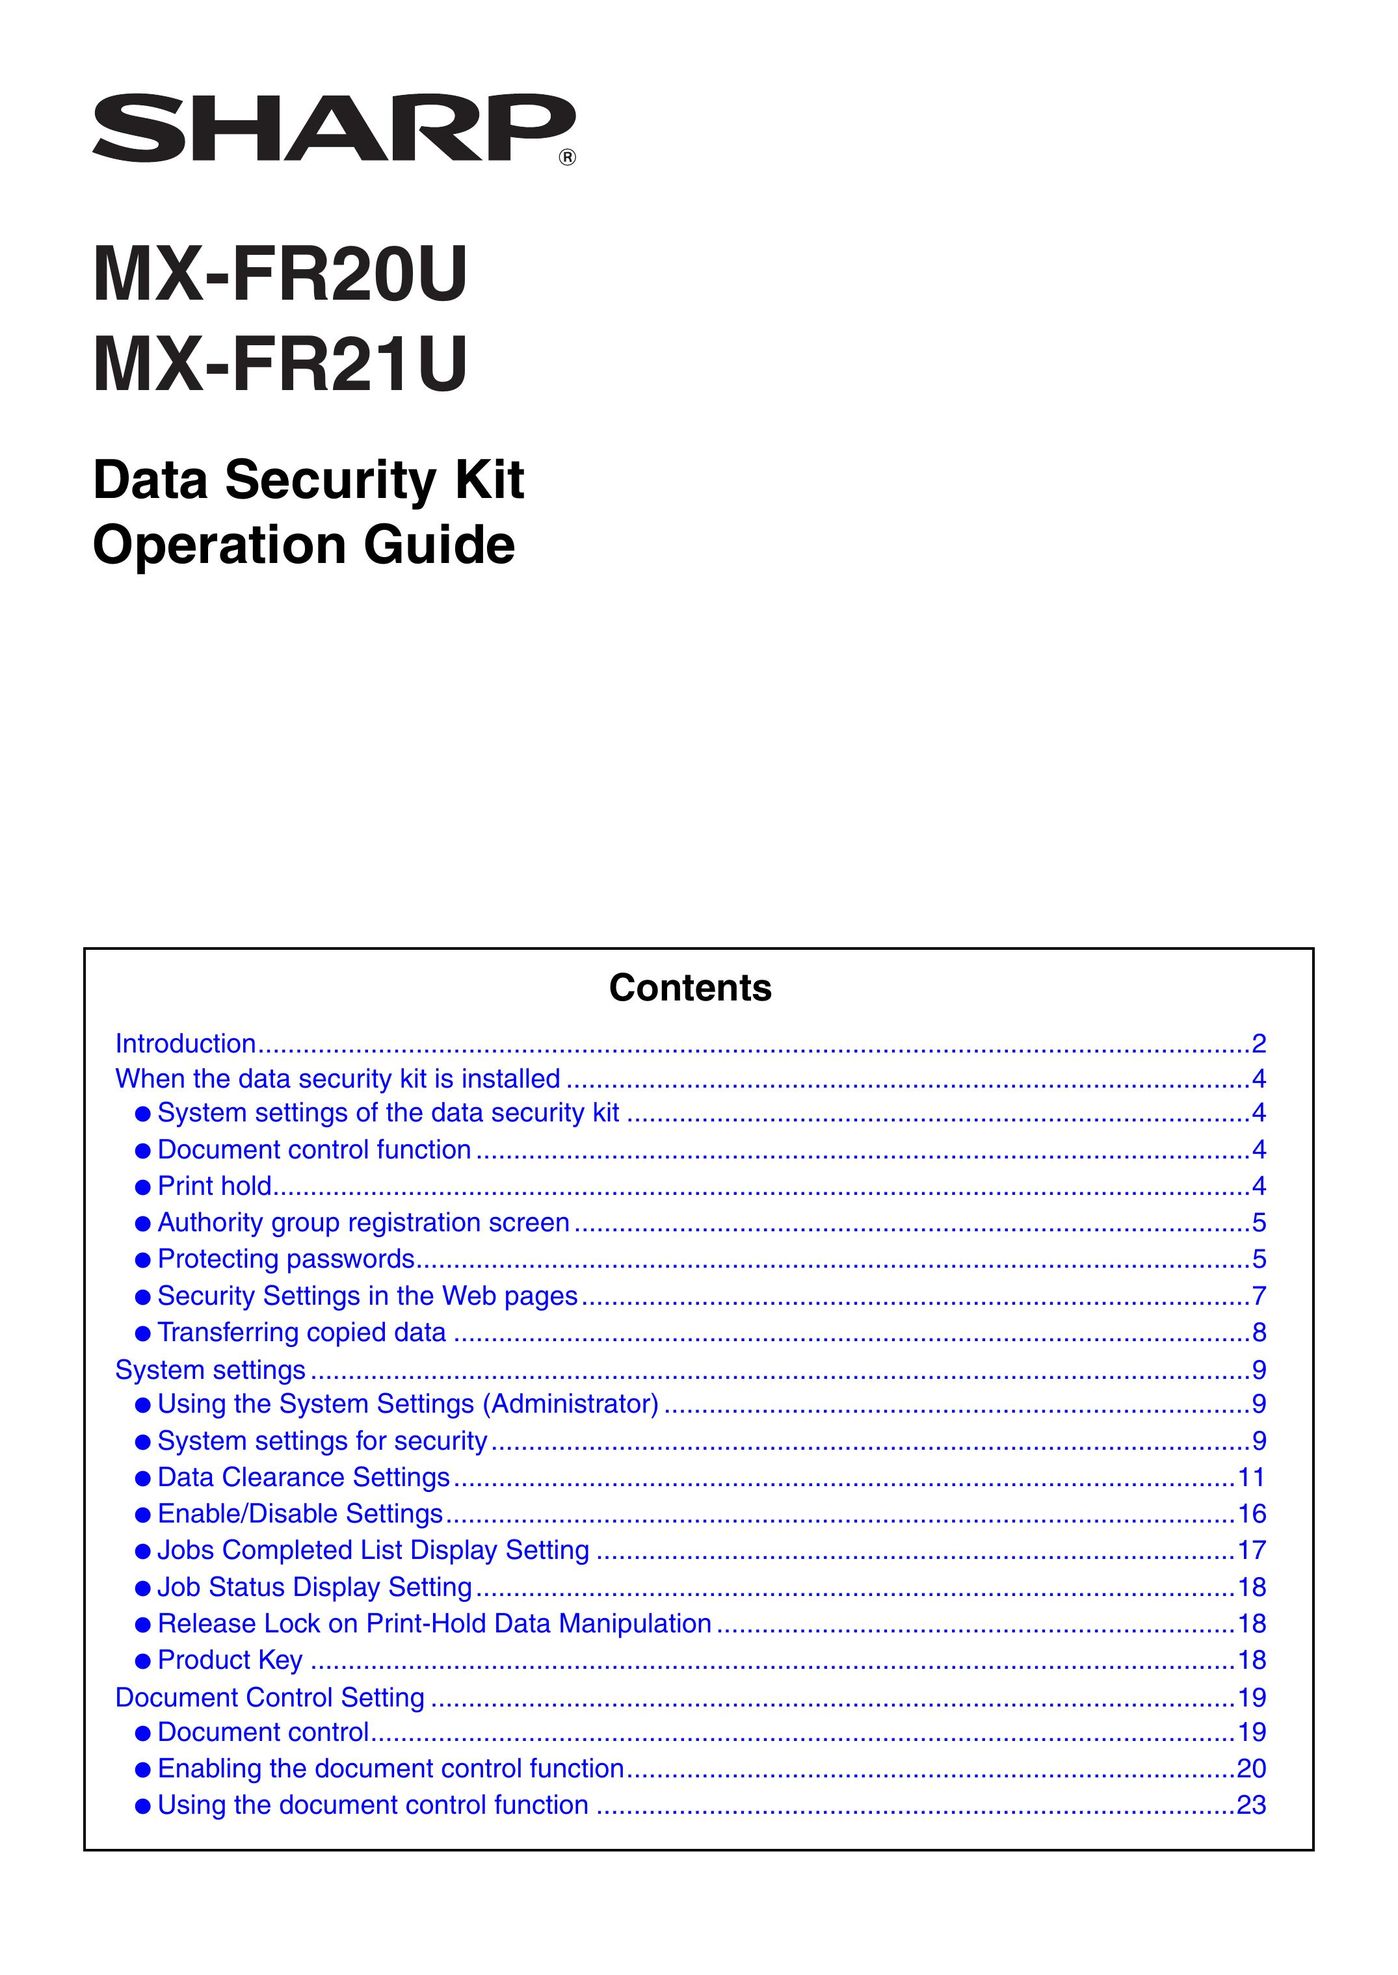 Sharp MX-FR21U Barcode Reader User Manual